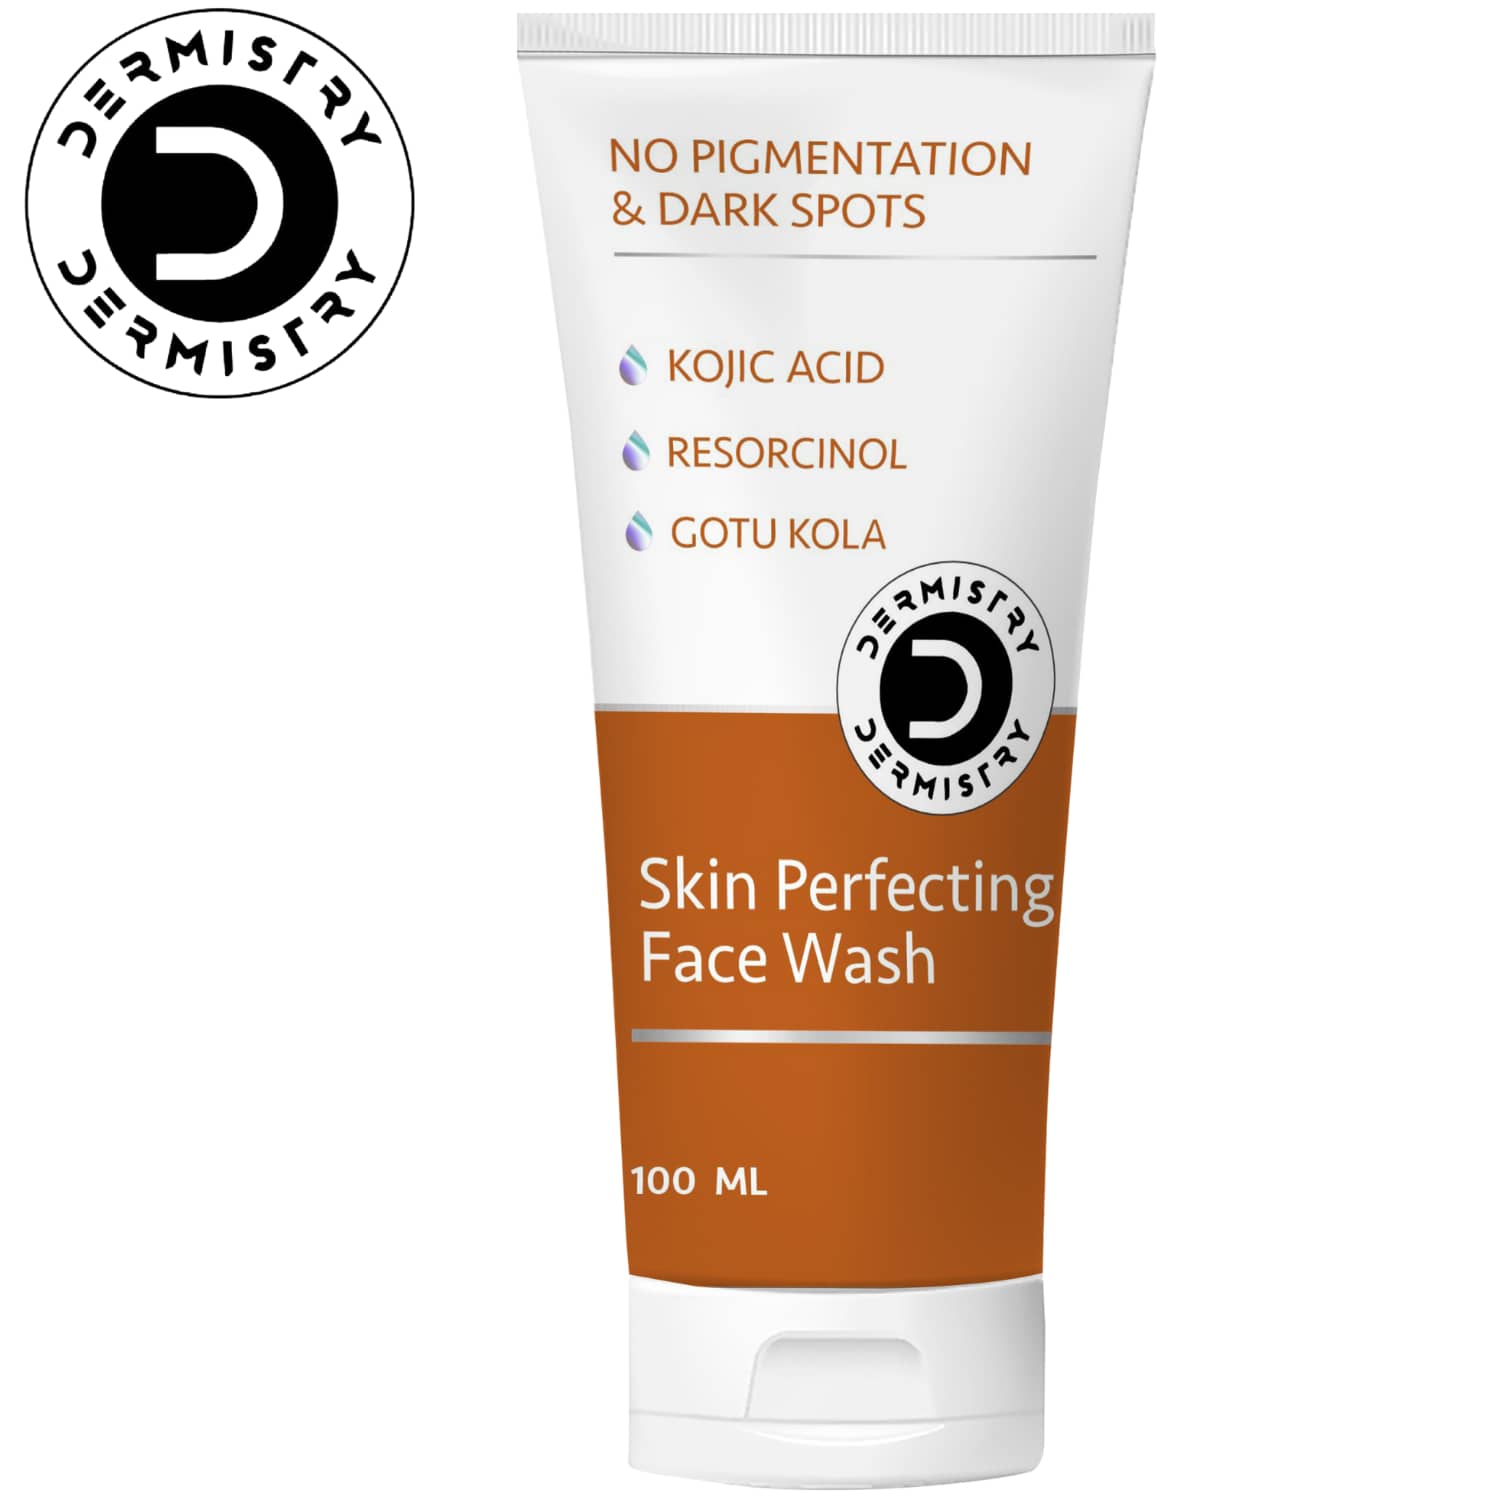 Dermistry Skin Perfecting Fairness Face Wash Kojic Acid Niacinamide Tanning Pigmentation Dark Spots-100ml